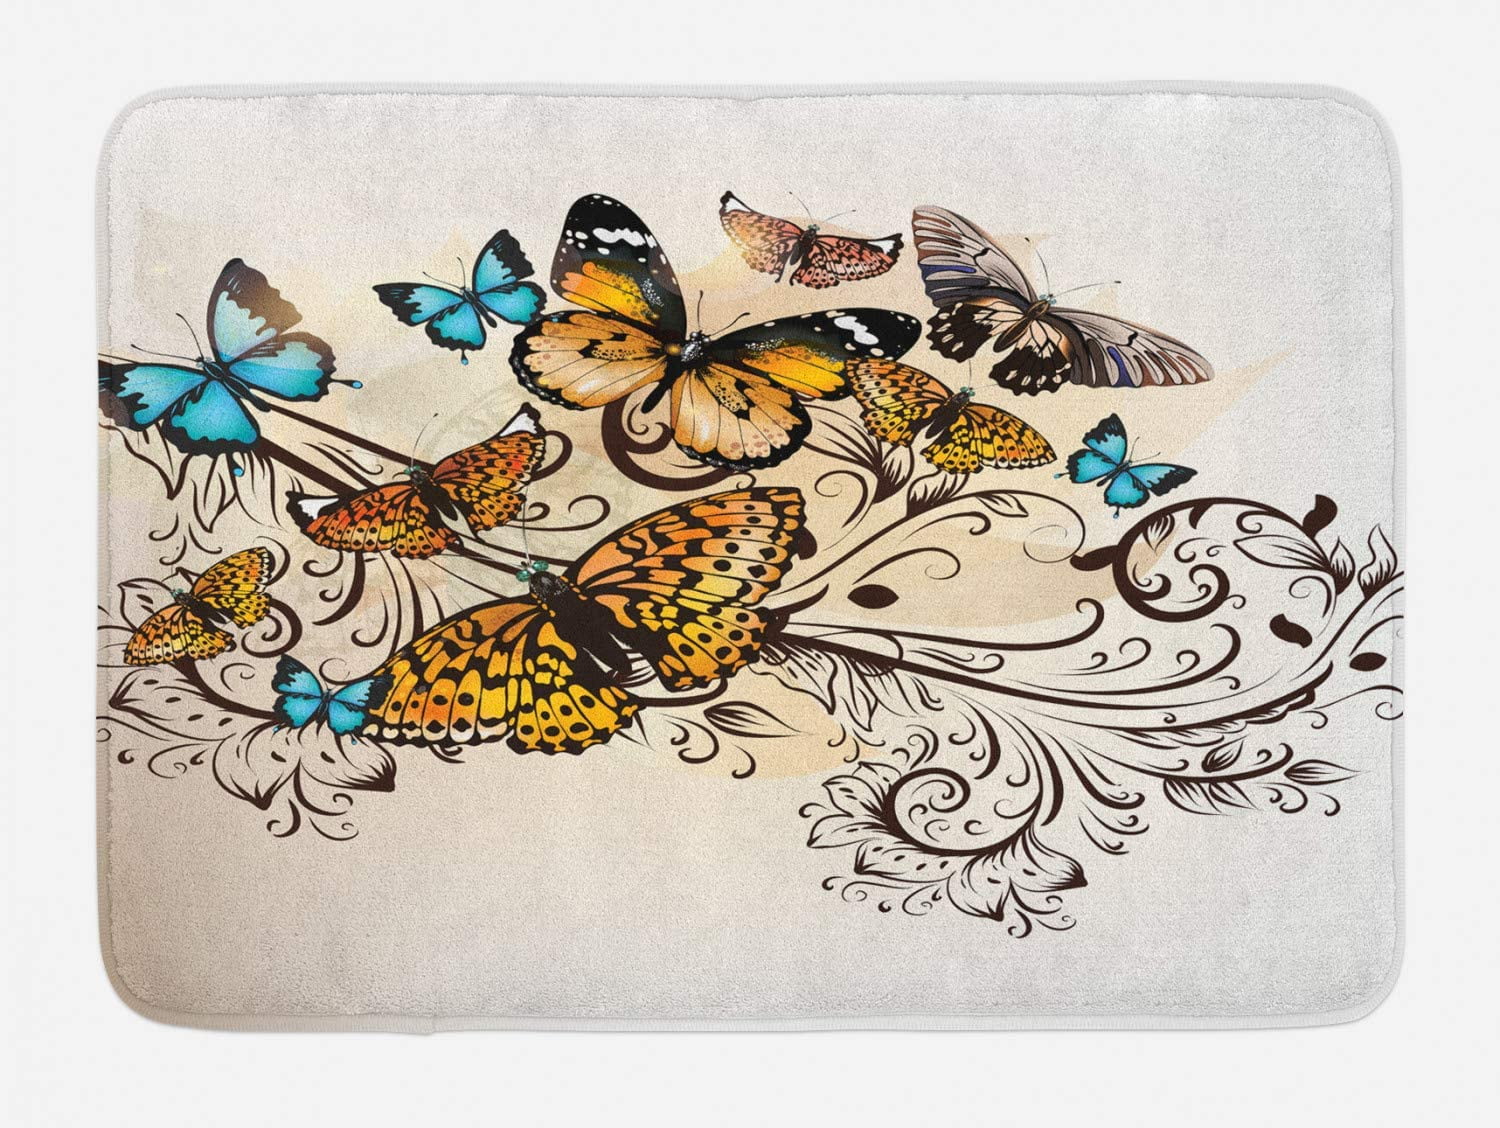 Butterfly Bath Mat, Monarch Butterflies Vintage Damask Inspired Design,  Plush Bathroom Decor Mat with Non Slip Backing, 29.5